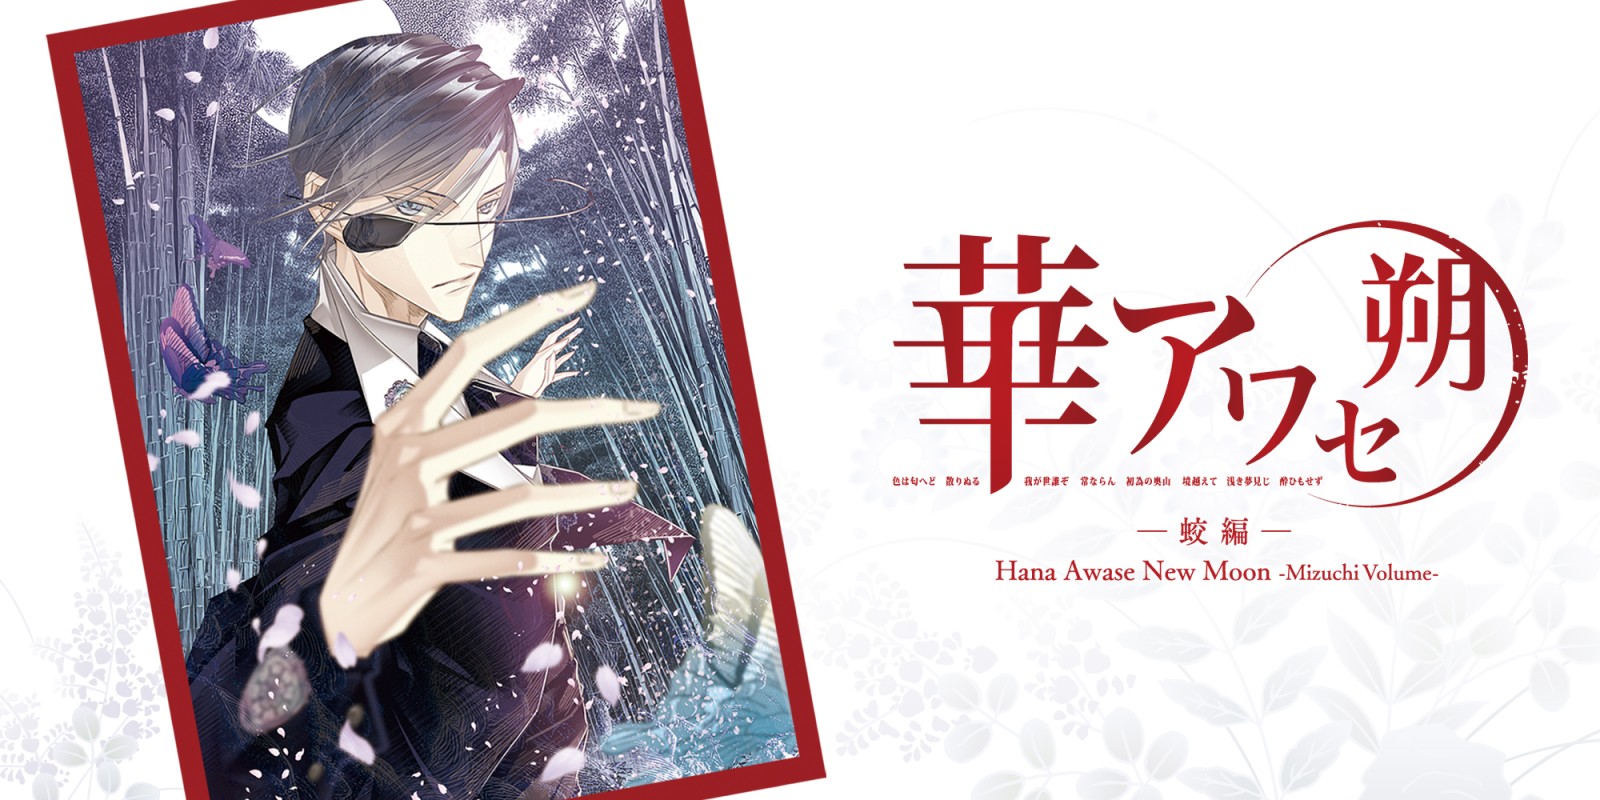 Hana Awase New Moon -Mizuchi Volume-